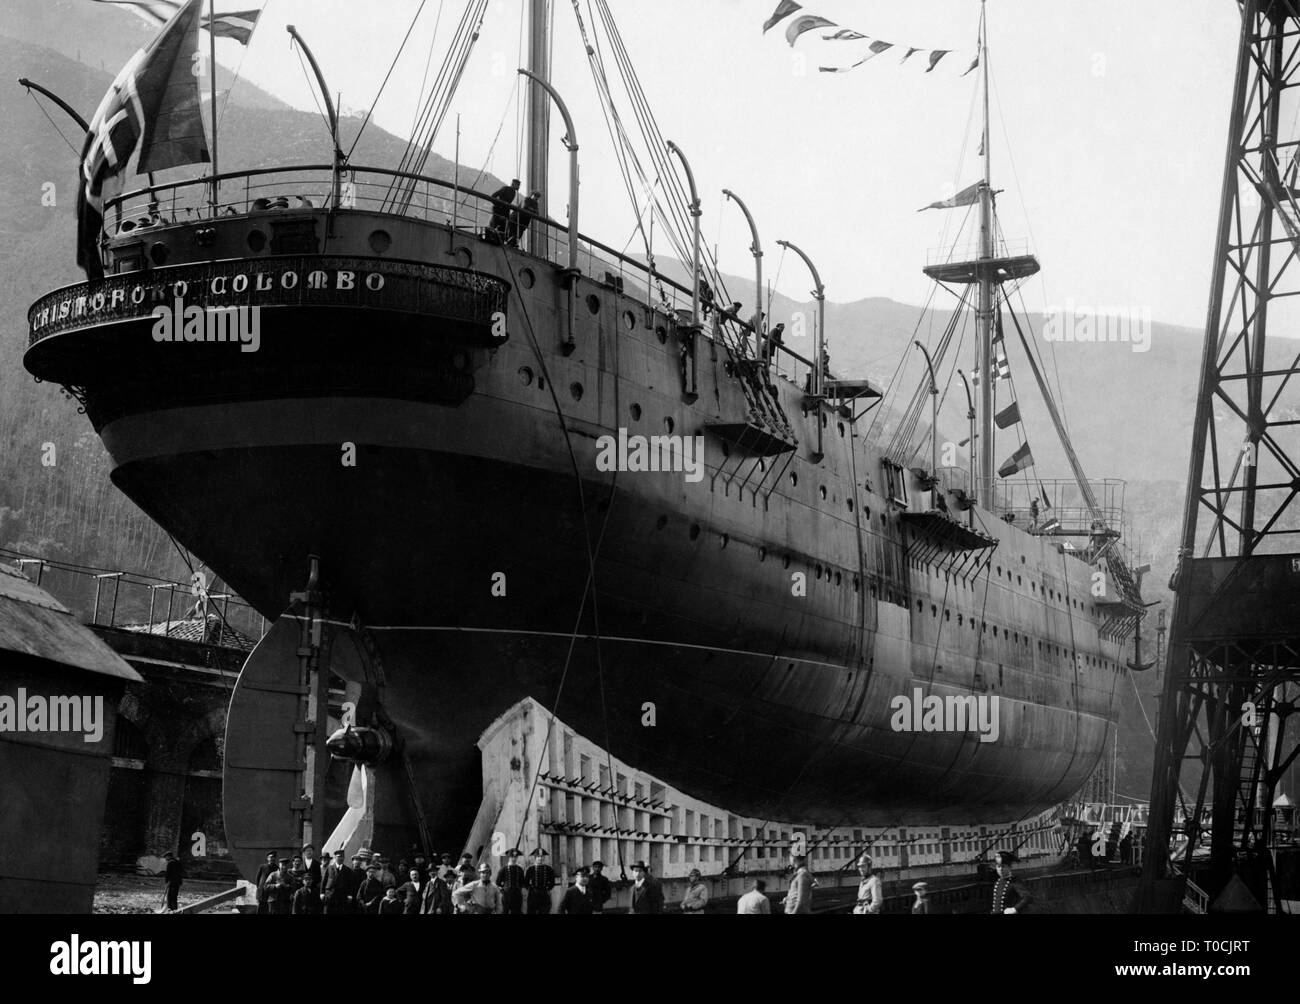 Navire de formation Cristoforo Colombo avant le lancement, Castellammare di Stabia, 1928 Banque D'Images